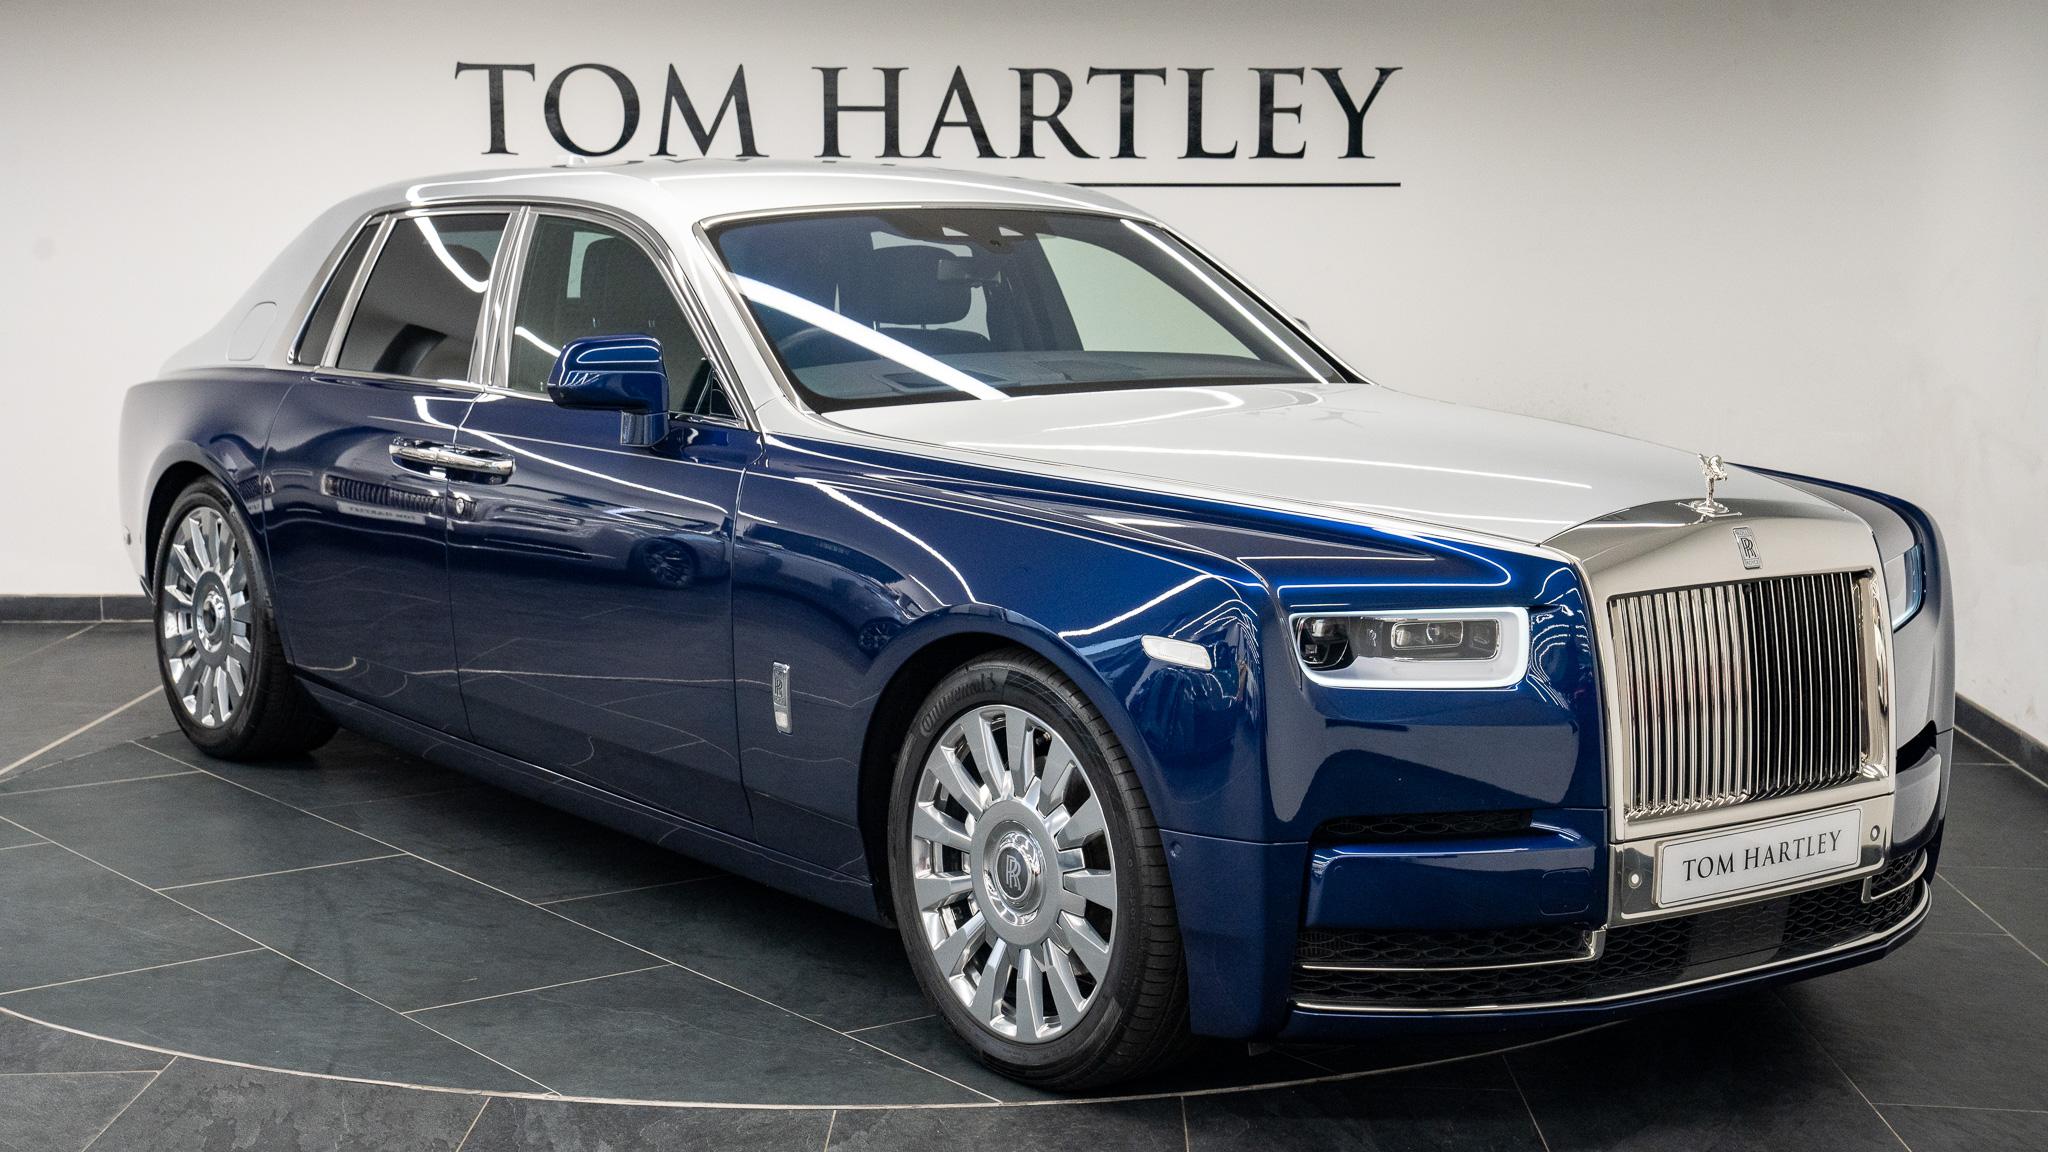 Used Blue RollsRoyce Phantom Saloon Cars For Sale  AutoTrader UK